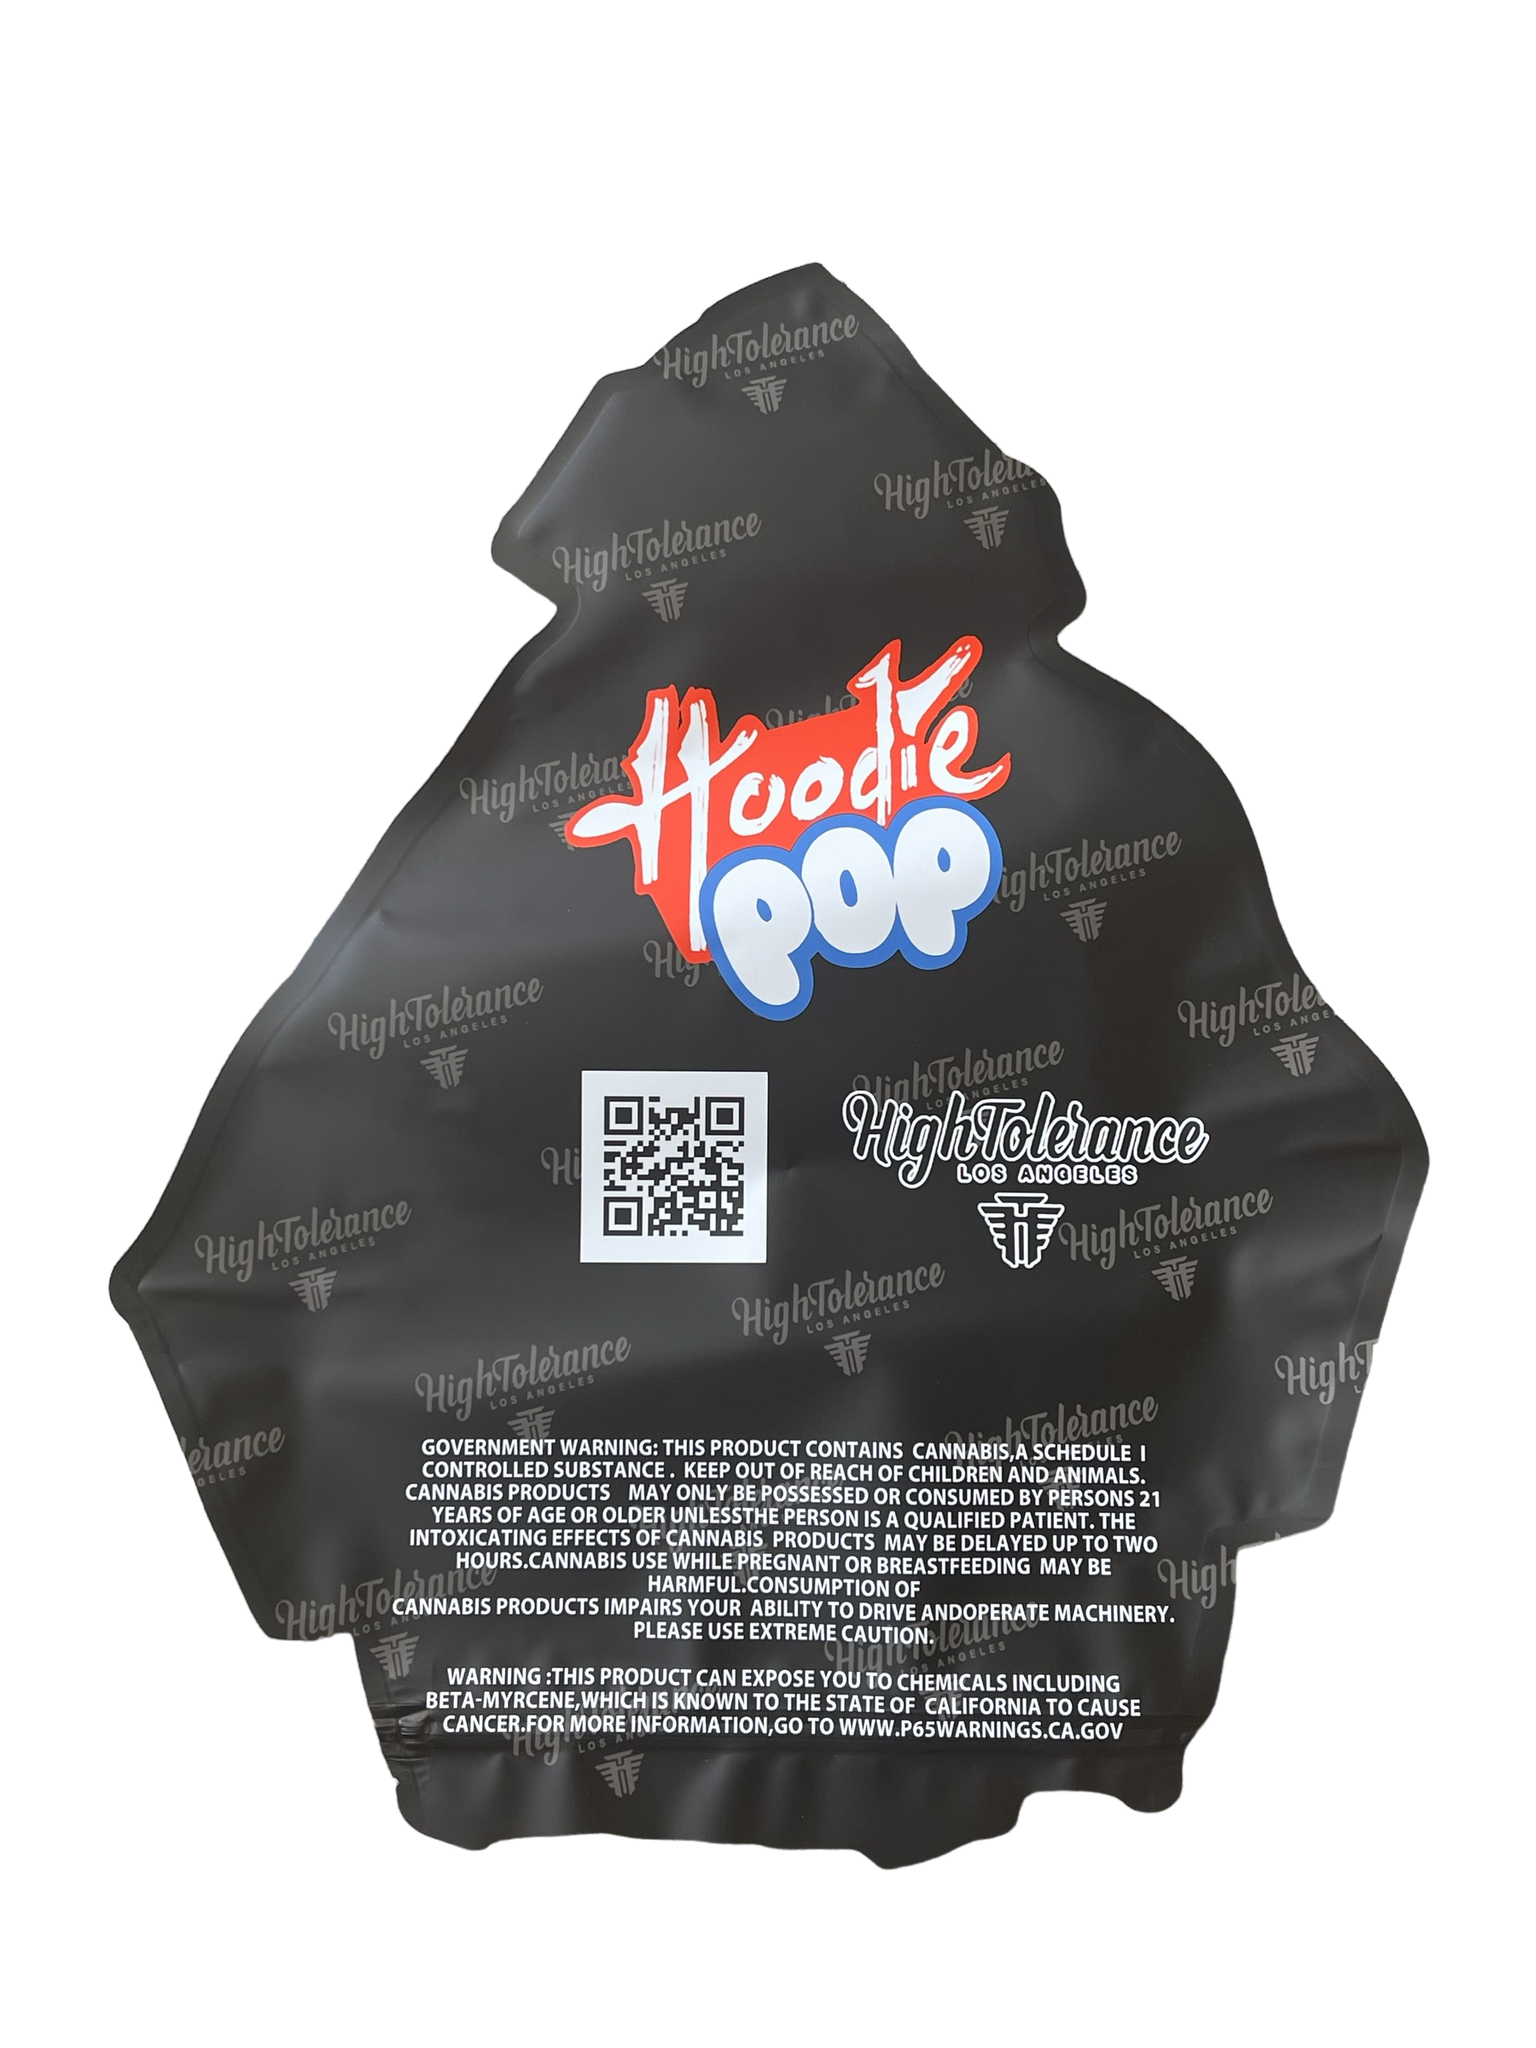 Hoodie POP Mylar Bag (Large) 1 LBS - 16OZ (454g) High Tolerance Pound Bag